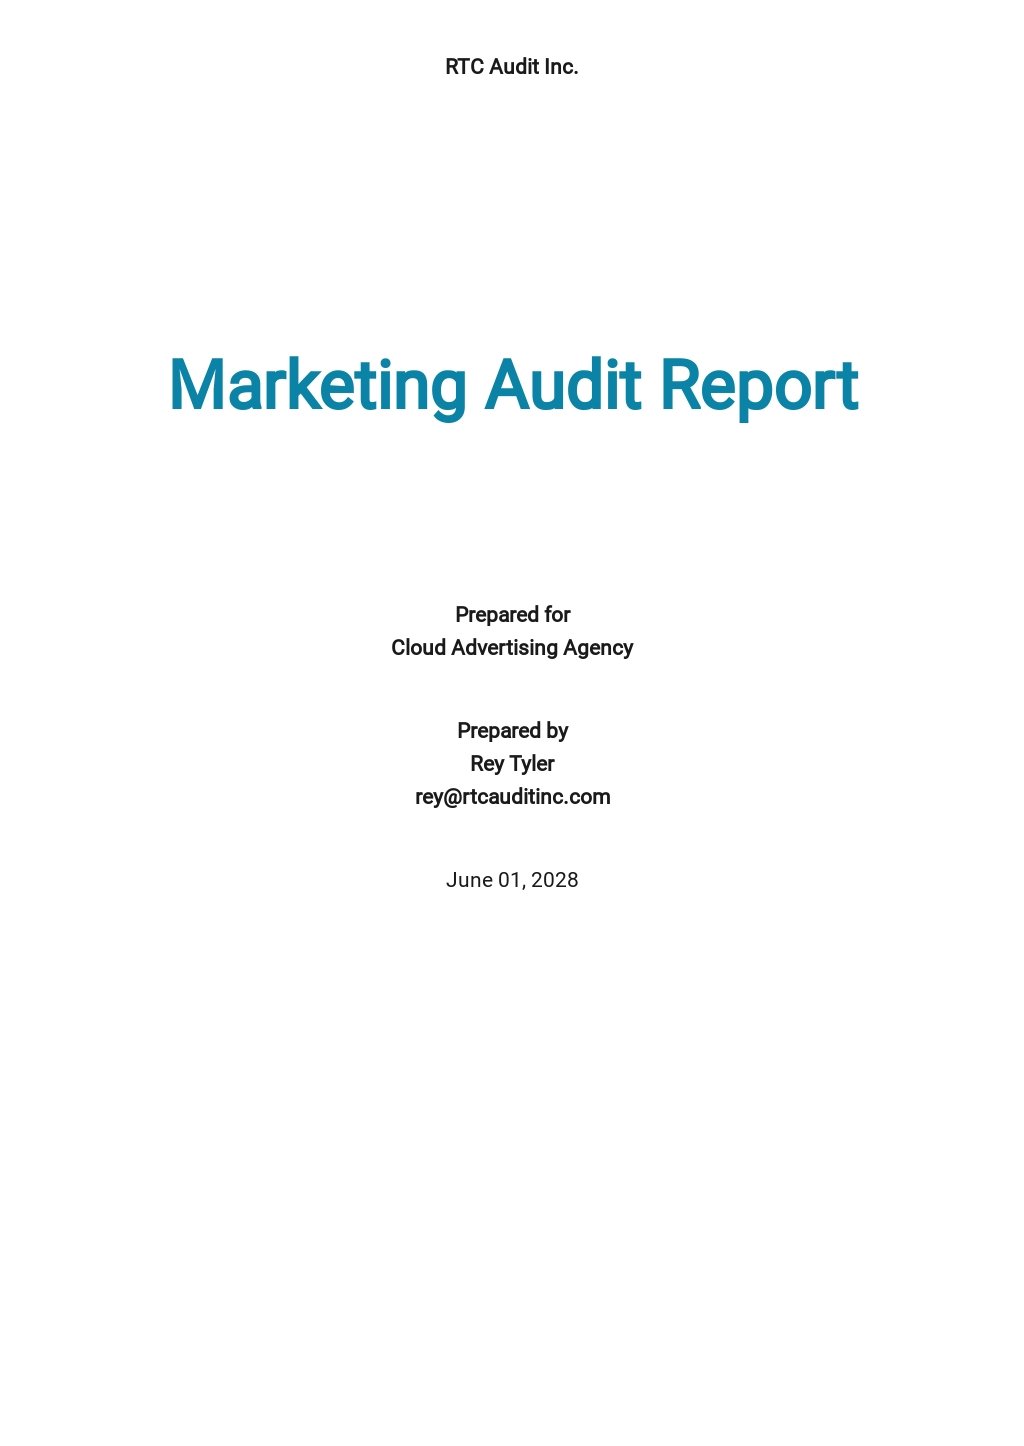 Marketing Audit Report Template.jpe